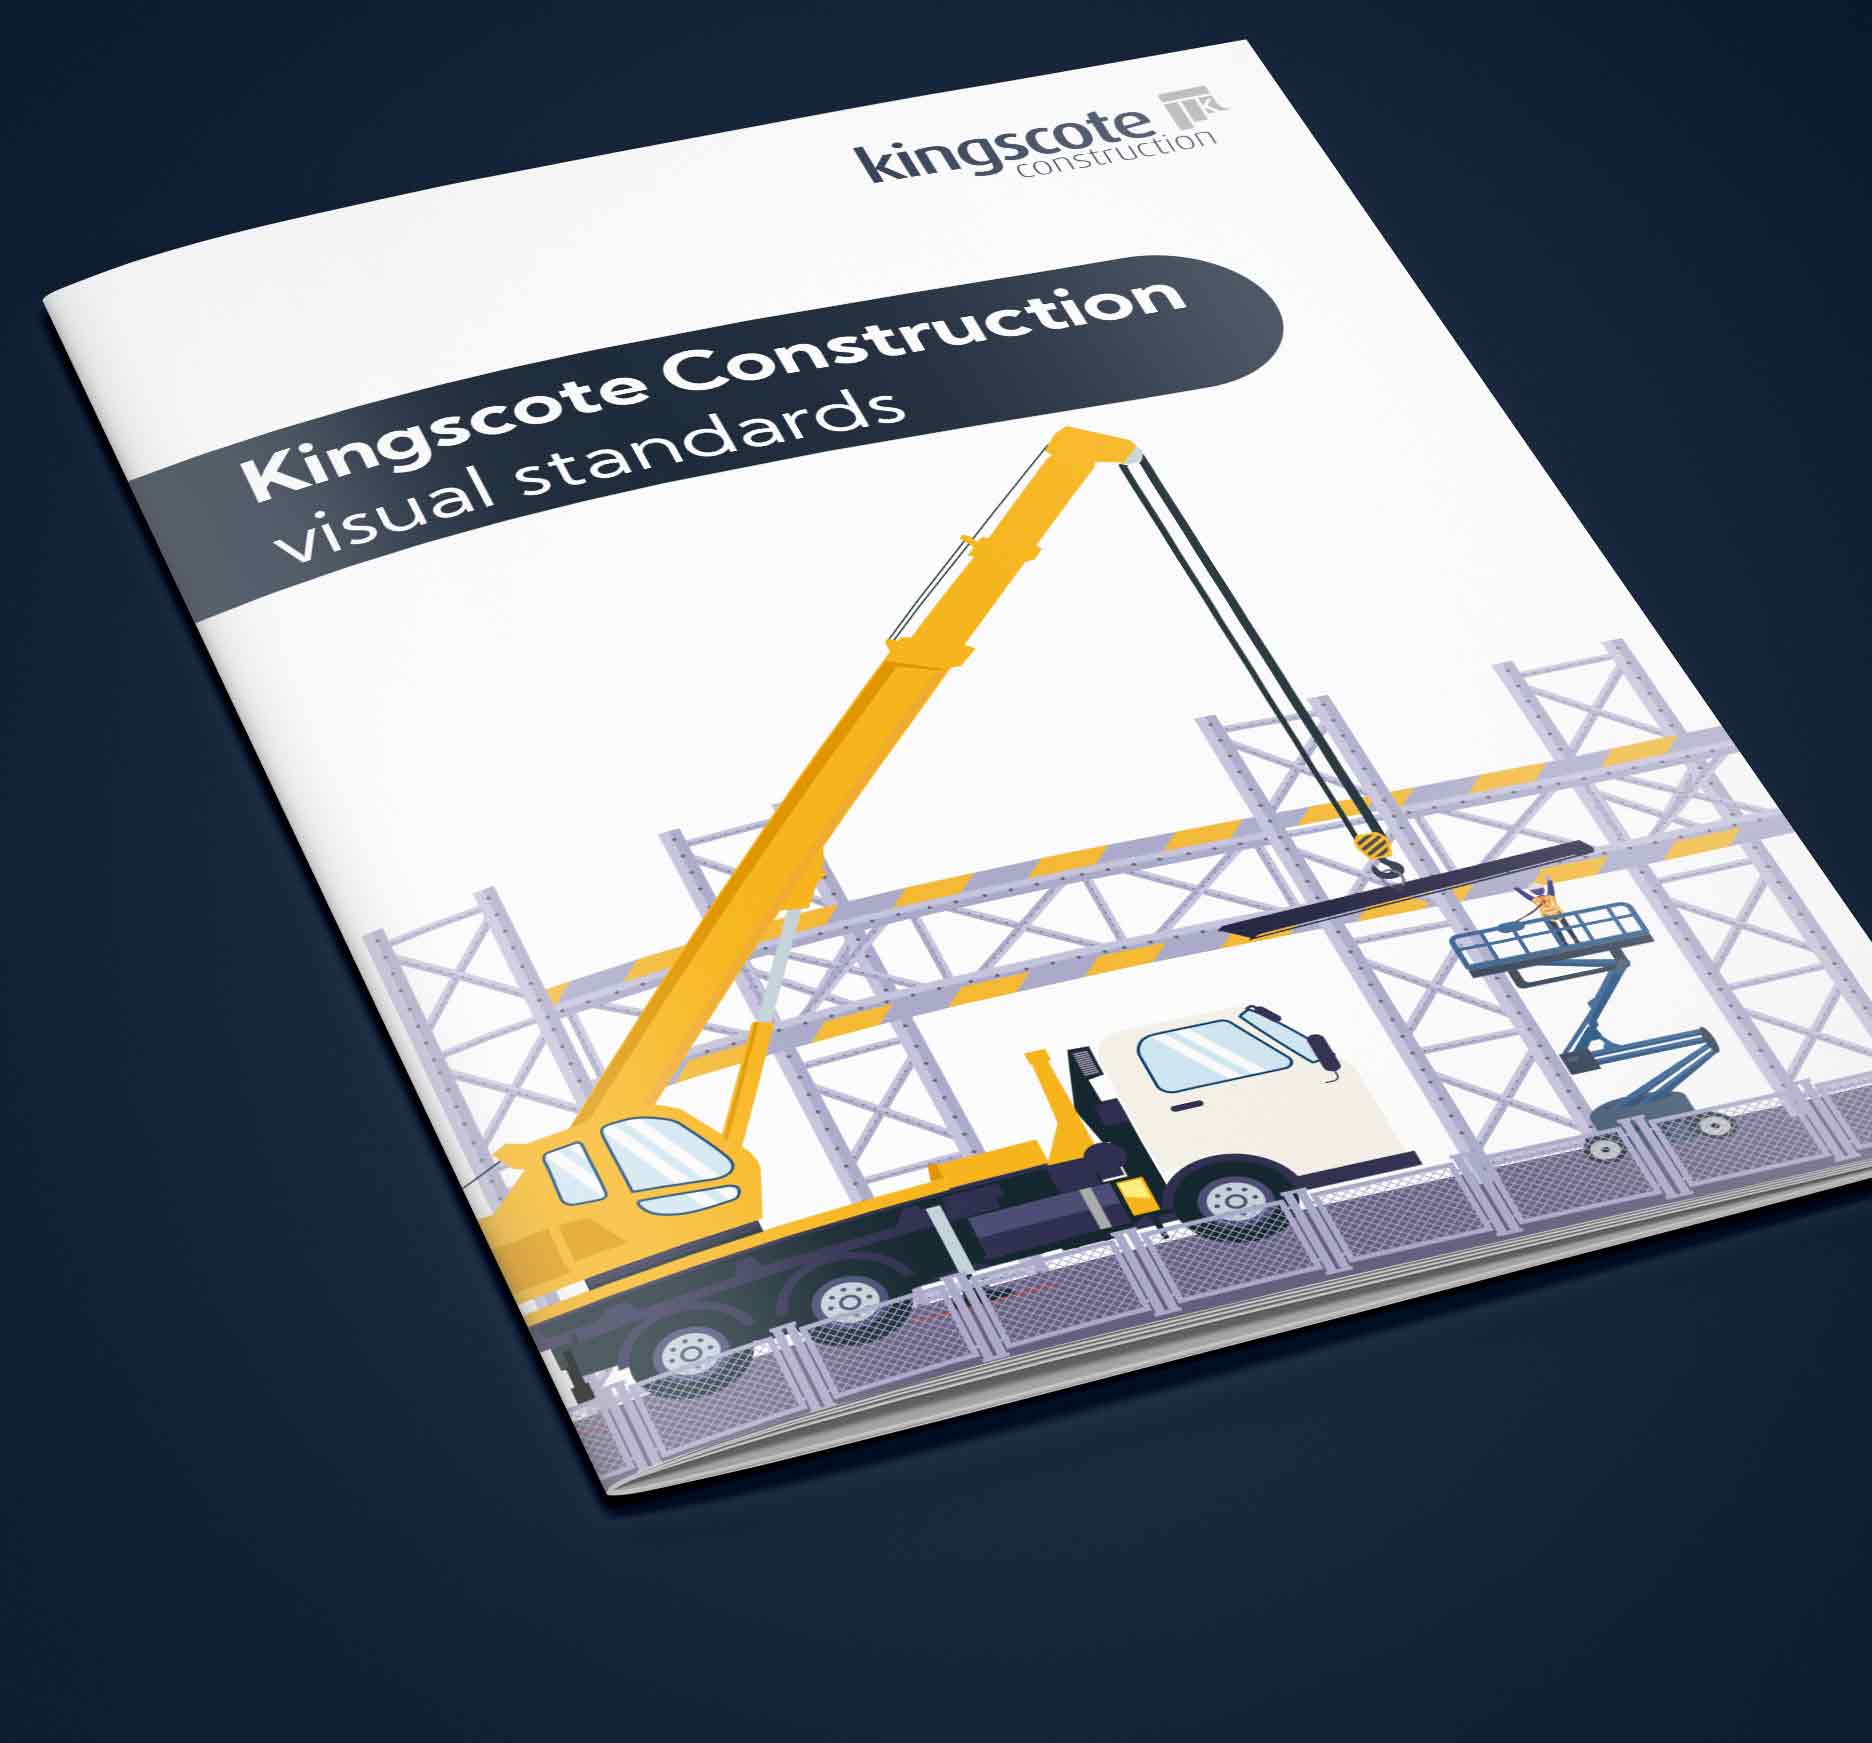 Kingscote Construction visual standards